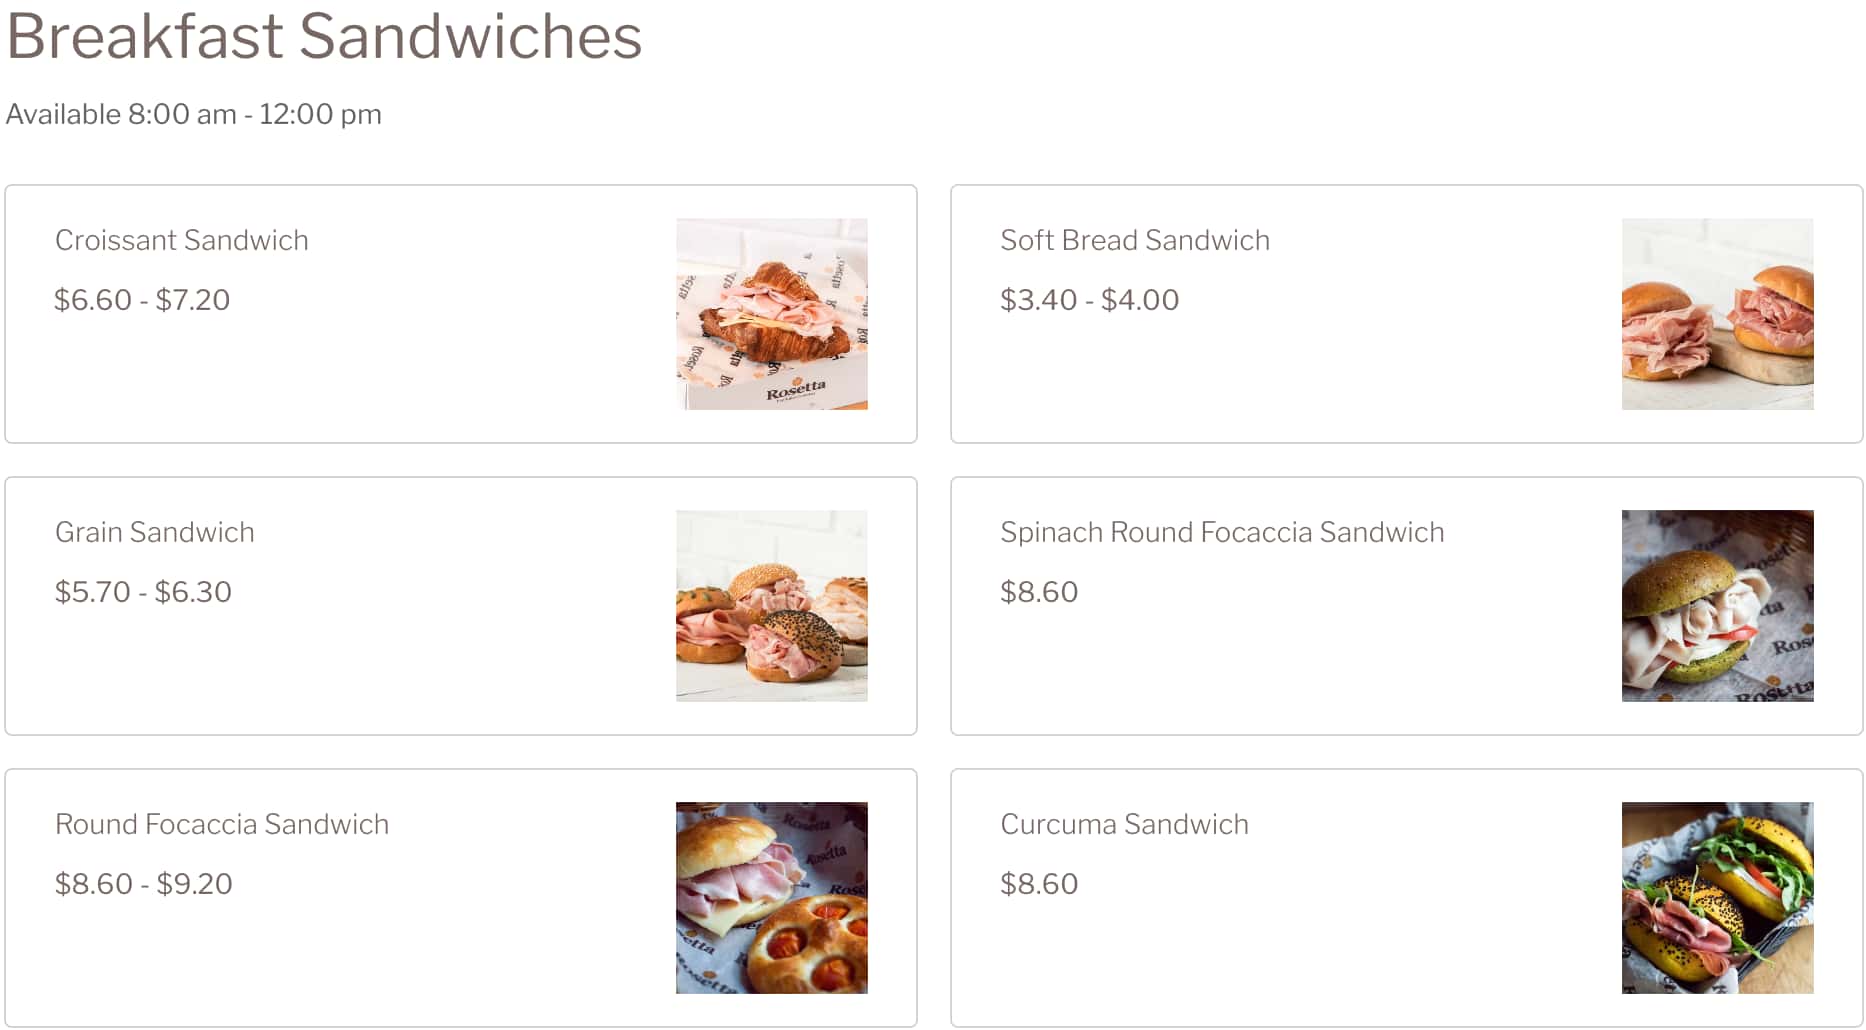 Rosetta Bakery Breakfast Sandwiches Menu